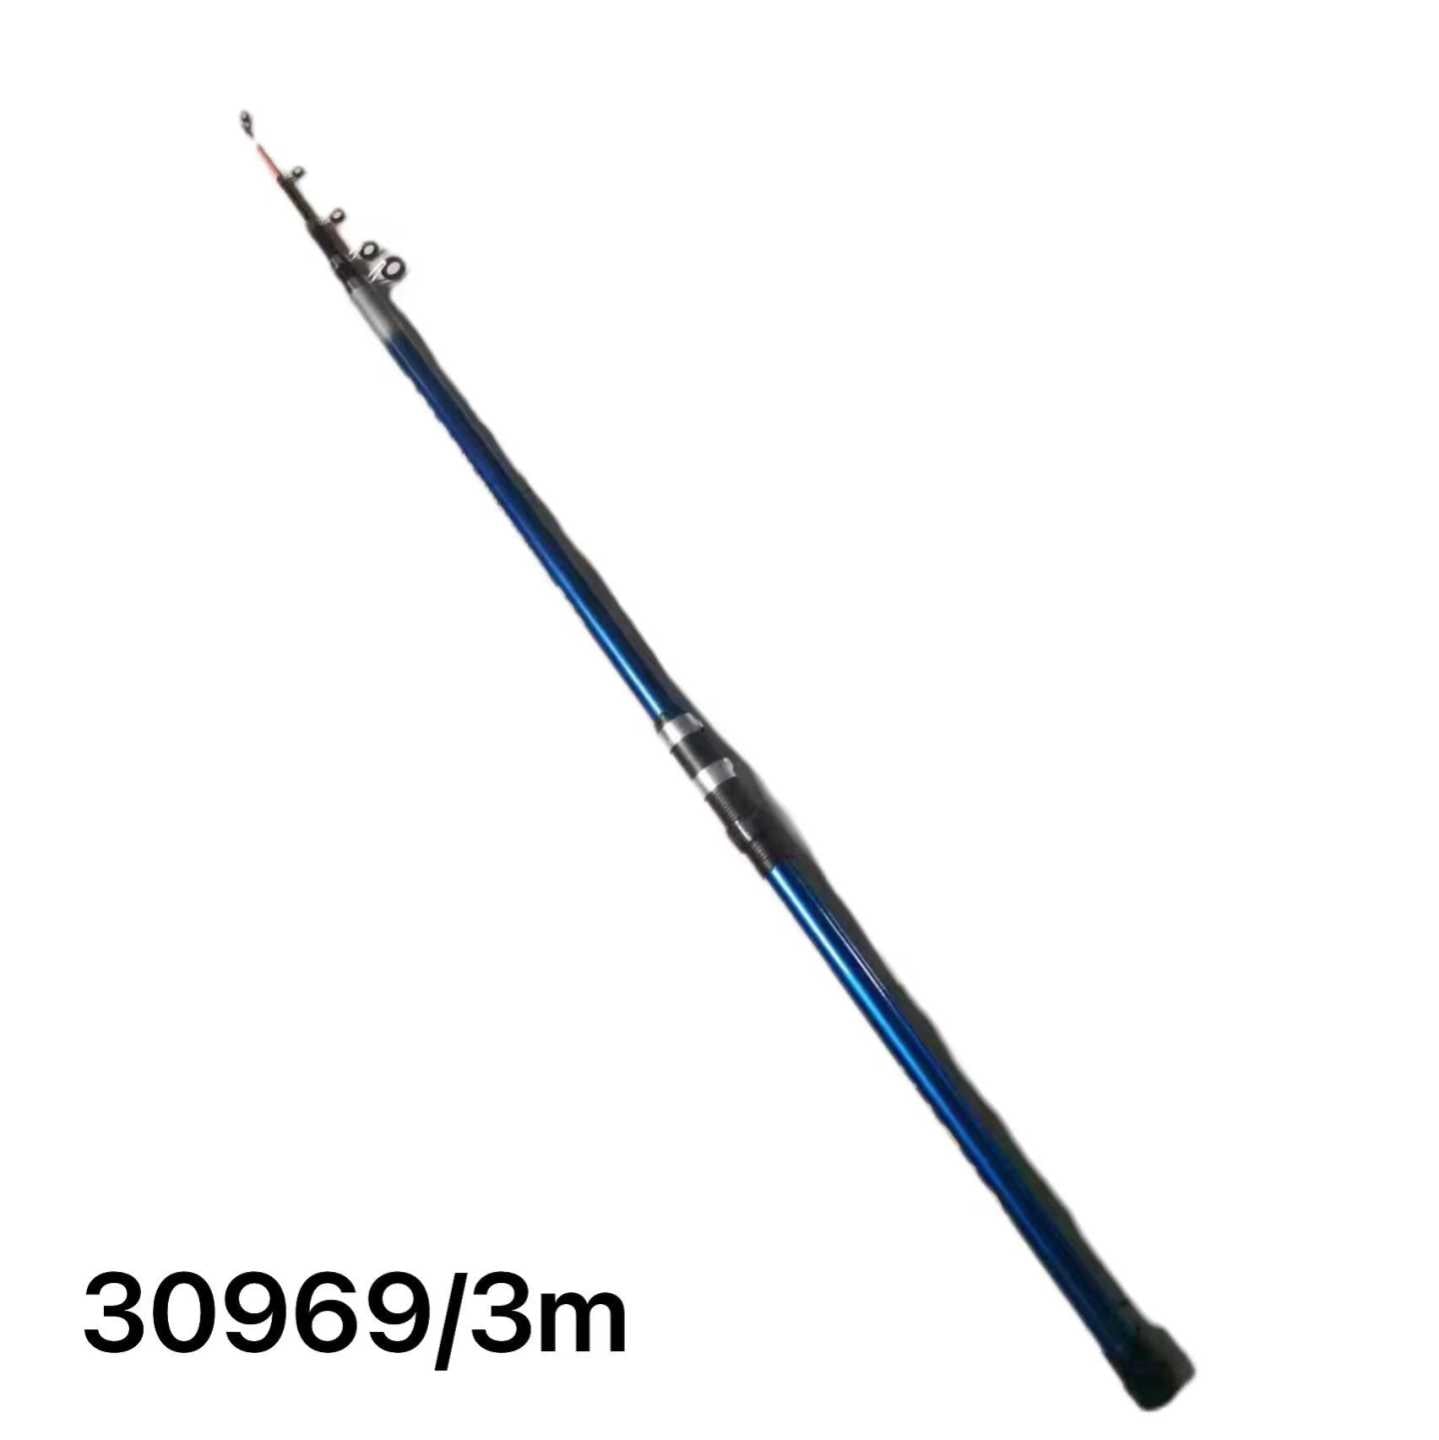 Fishing rod - Telescopic - 30 - 3m - 30969